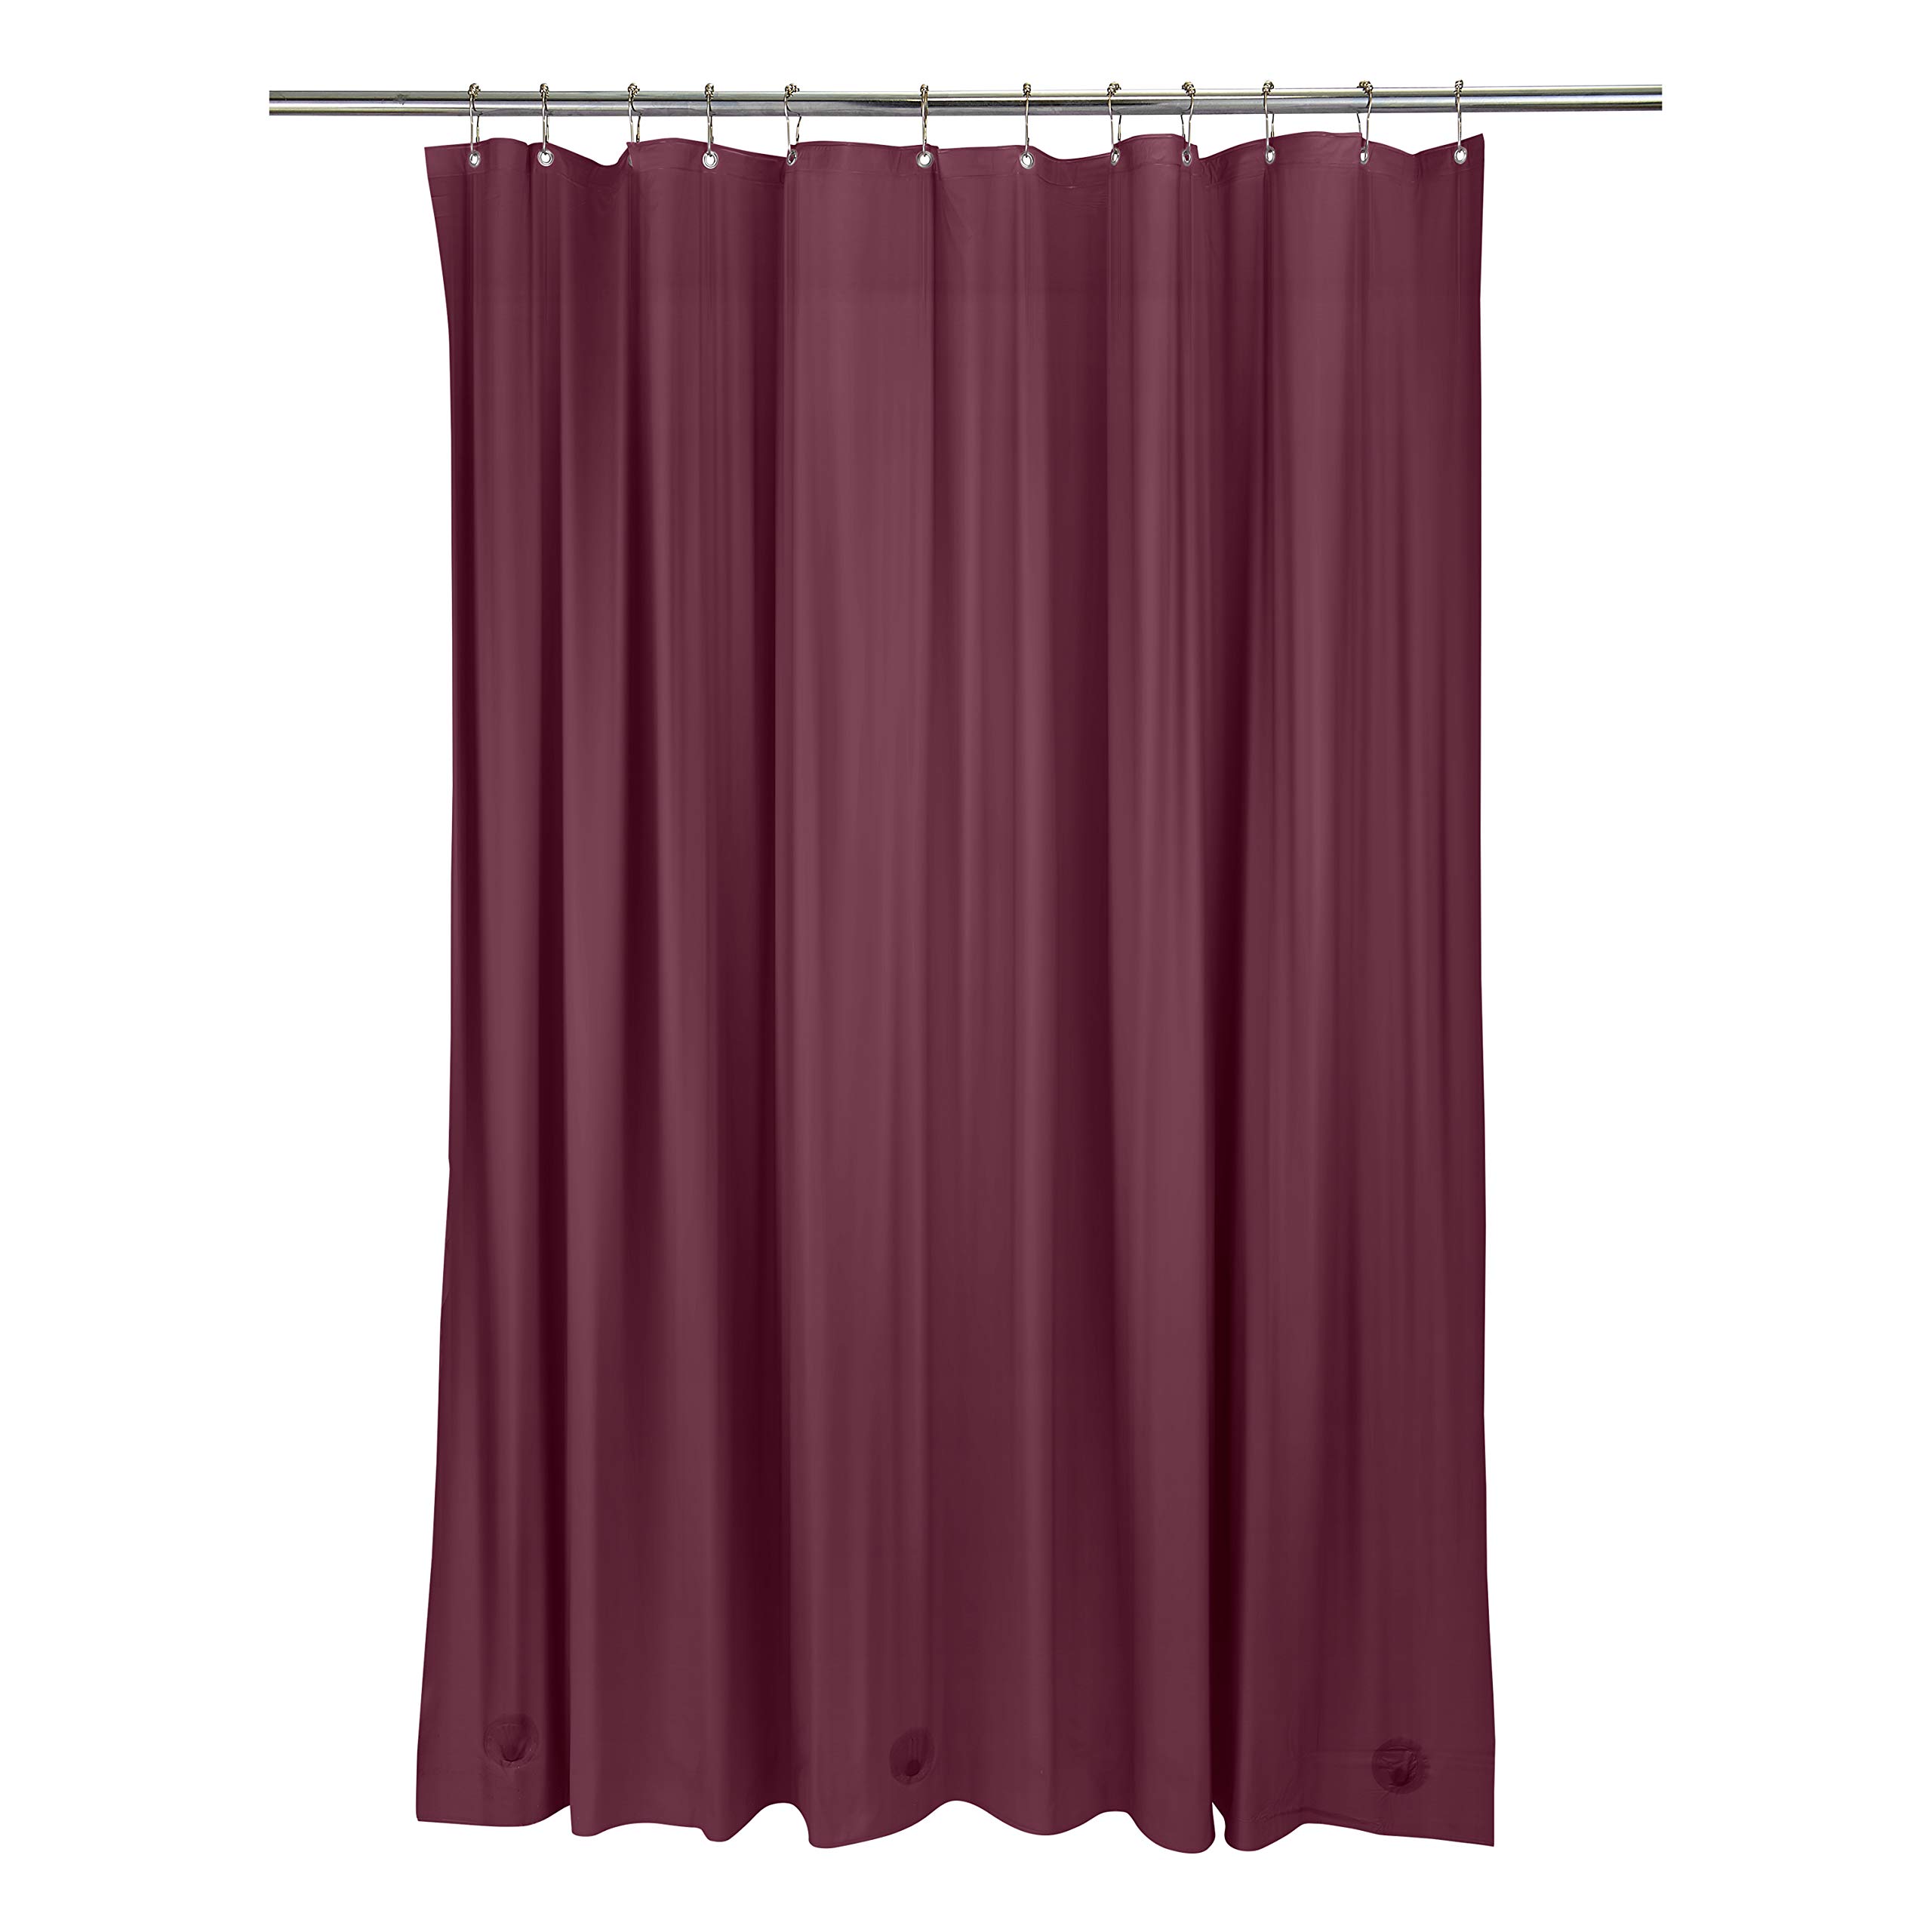 Bath Bliss Heavy Shower Curtain Liner, 12 Rust Resistant Metal Grommets, 3 Weighted Magnet Hem, Burgundy